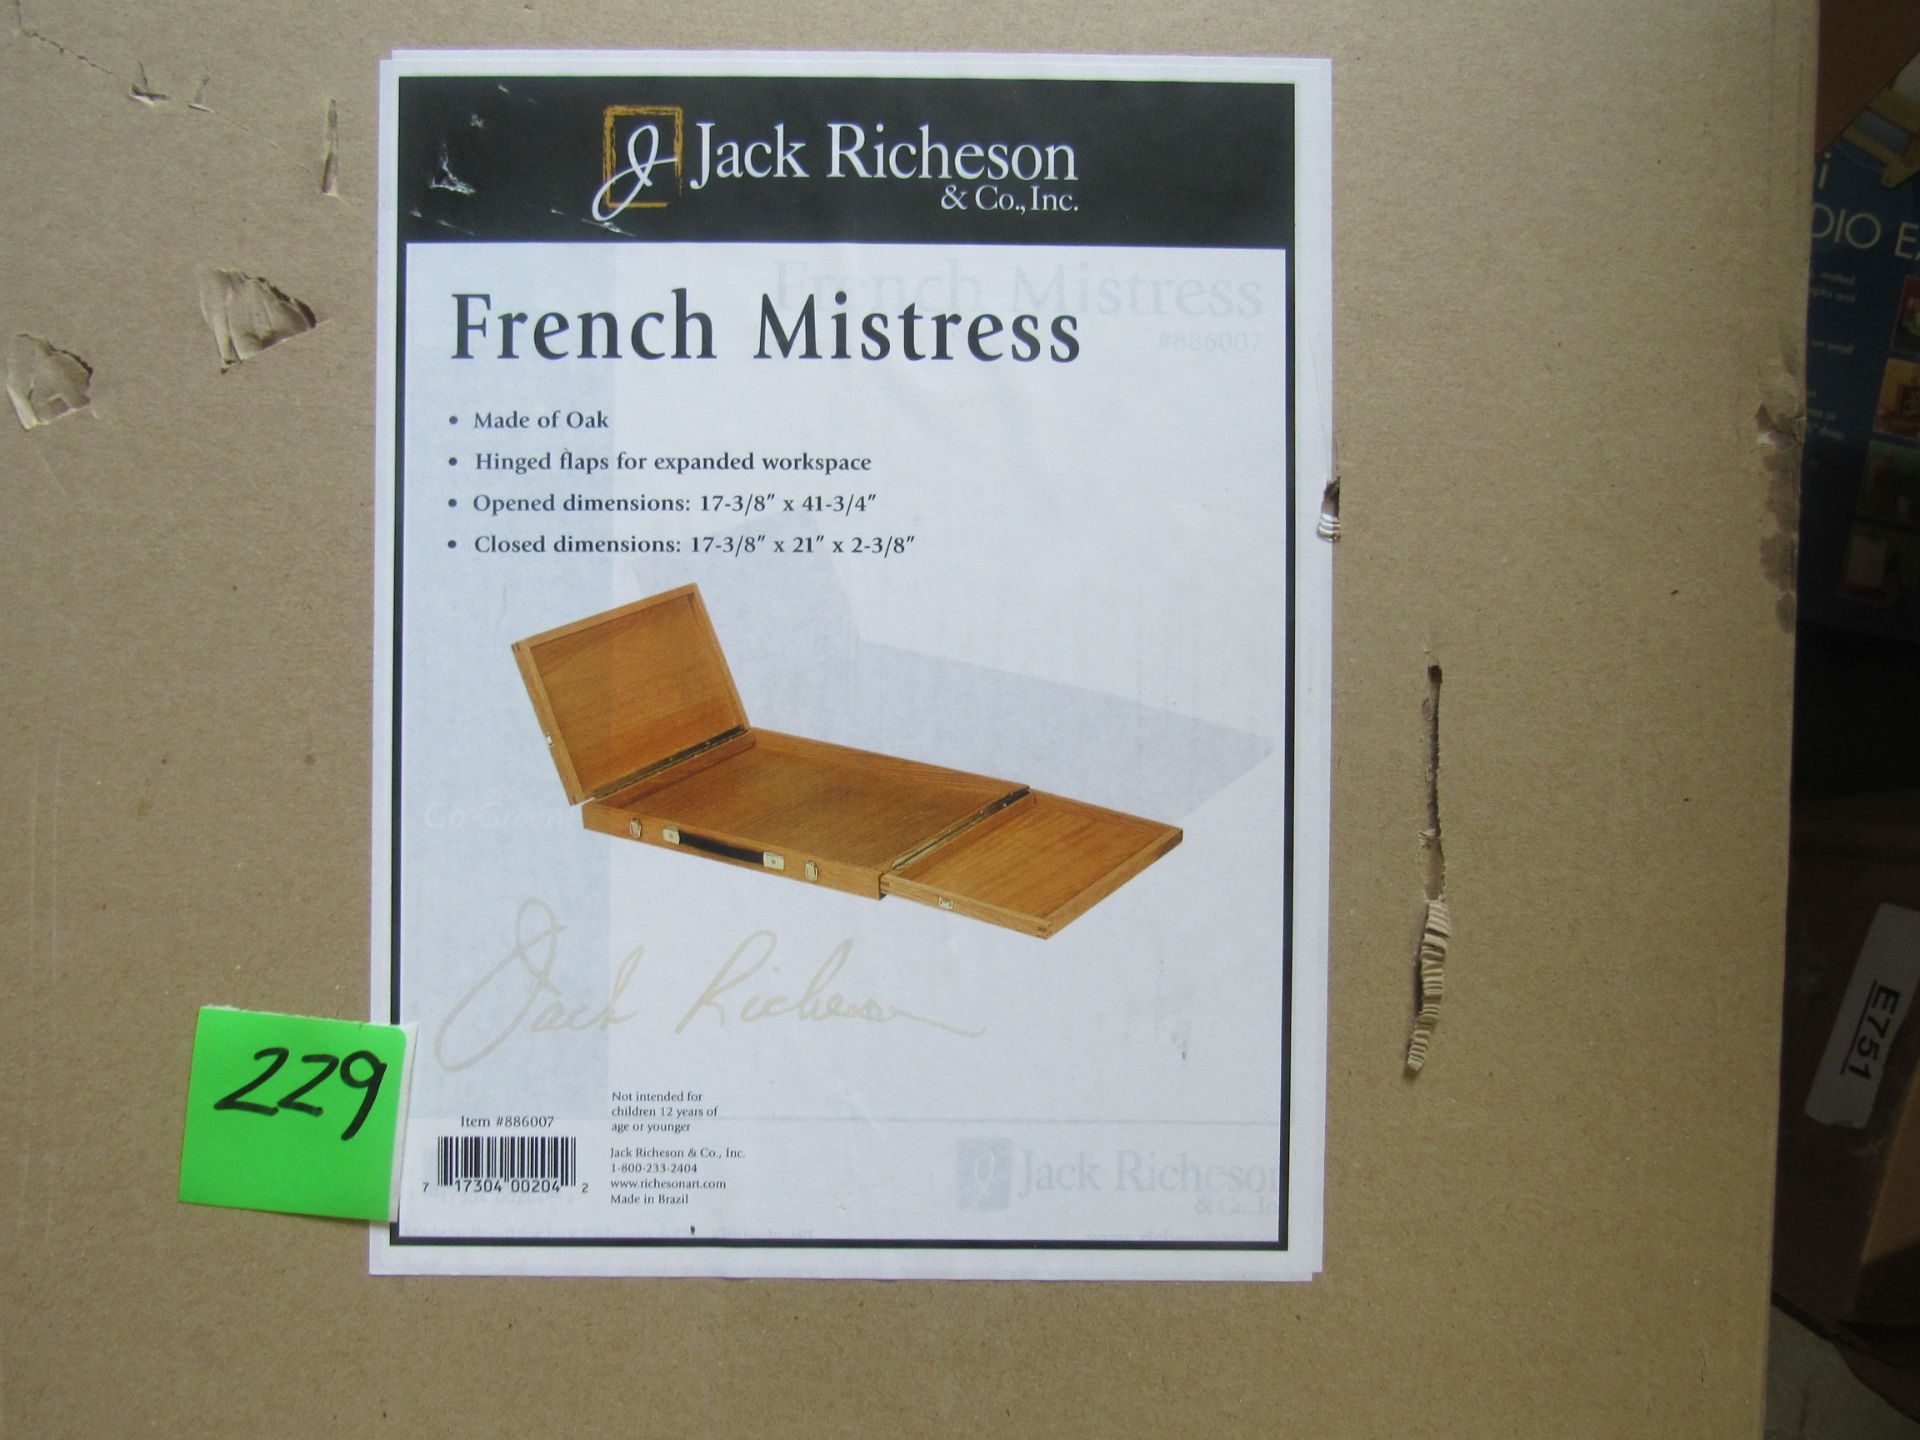 Jack Richeson & Co oak French mistress opened 17 3/8" x 41 3/4", item 886007